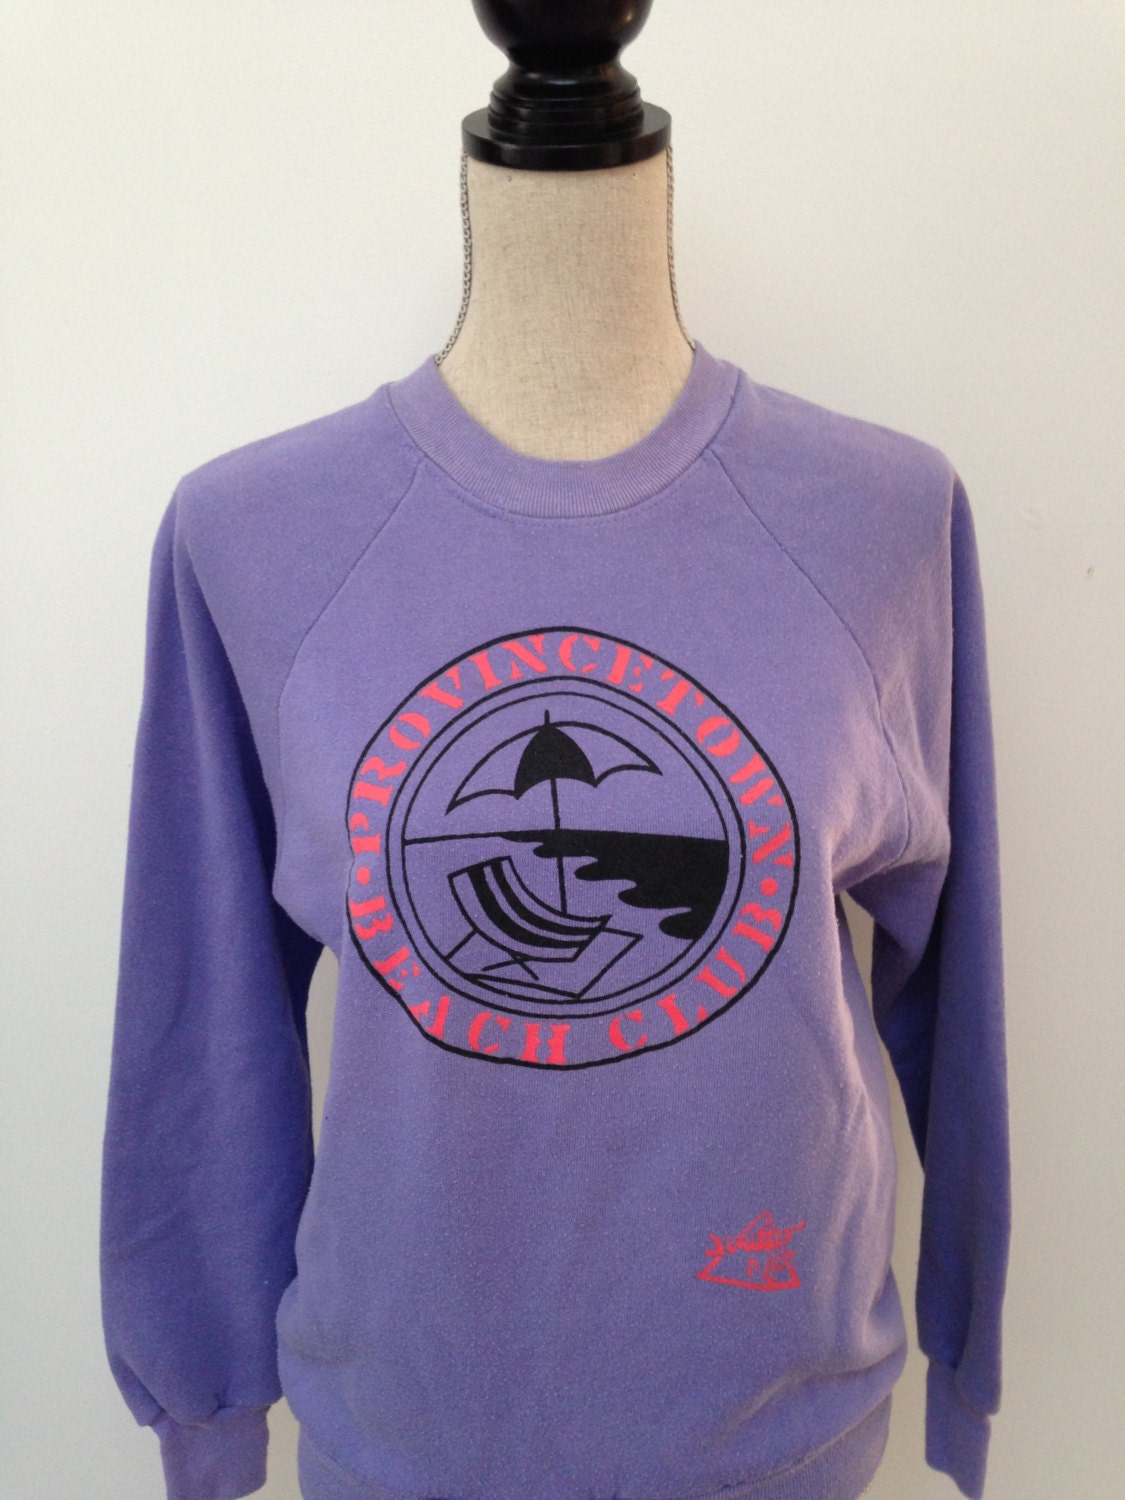 Vintage Provincetown Cape Cod 1986 Sweatshirt by 21Vintage on Etsy